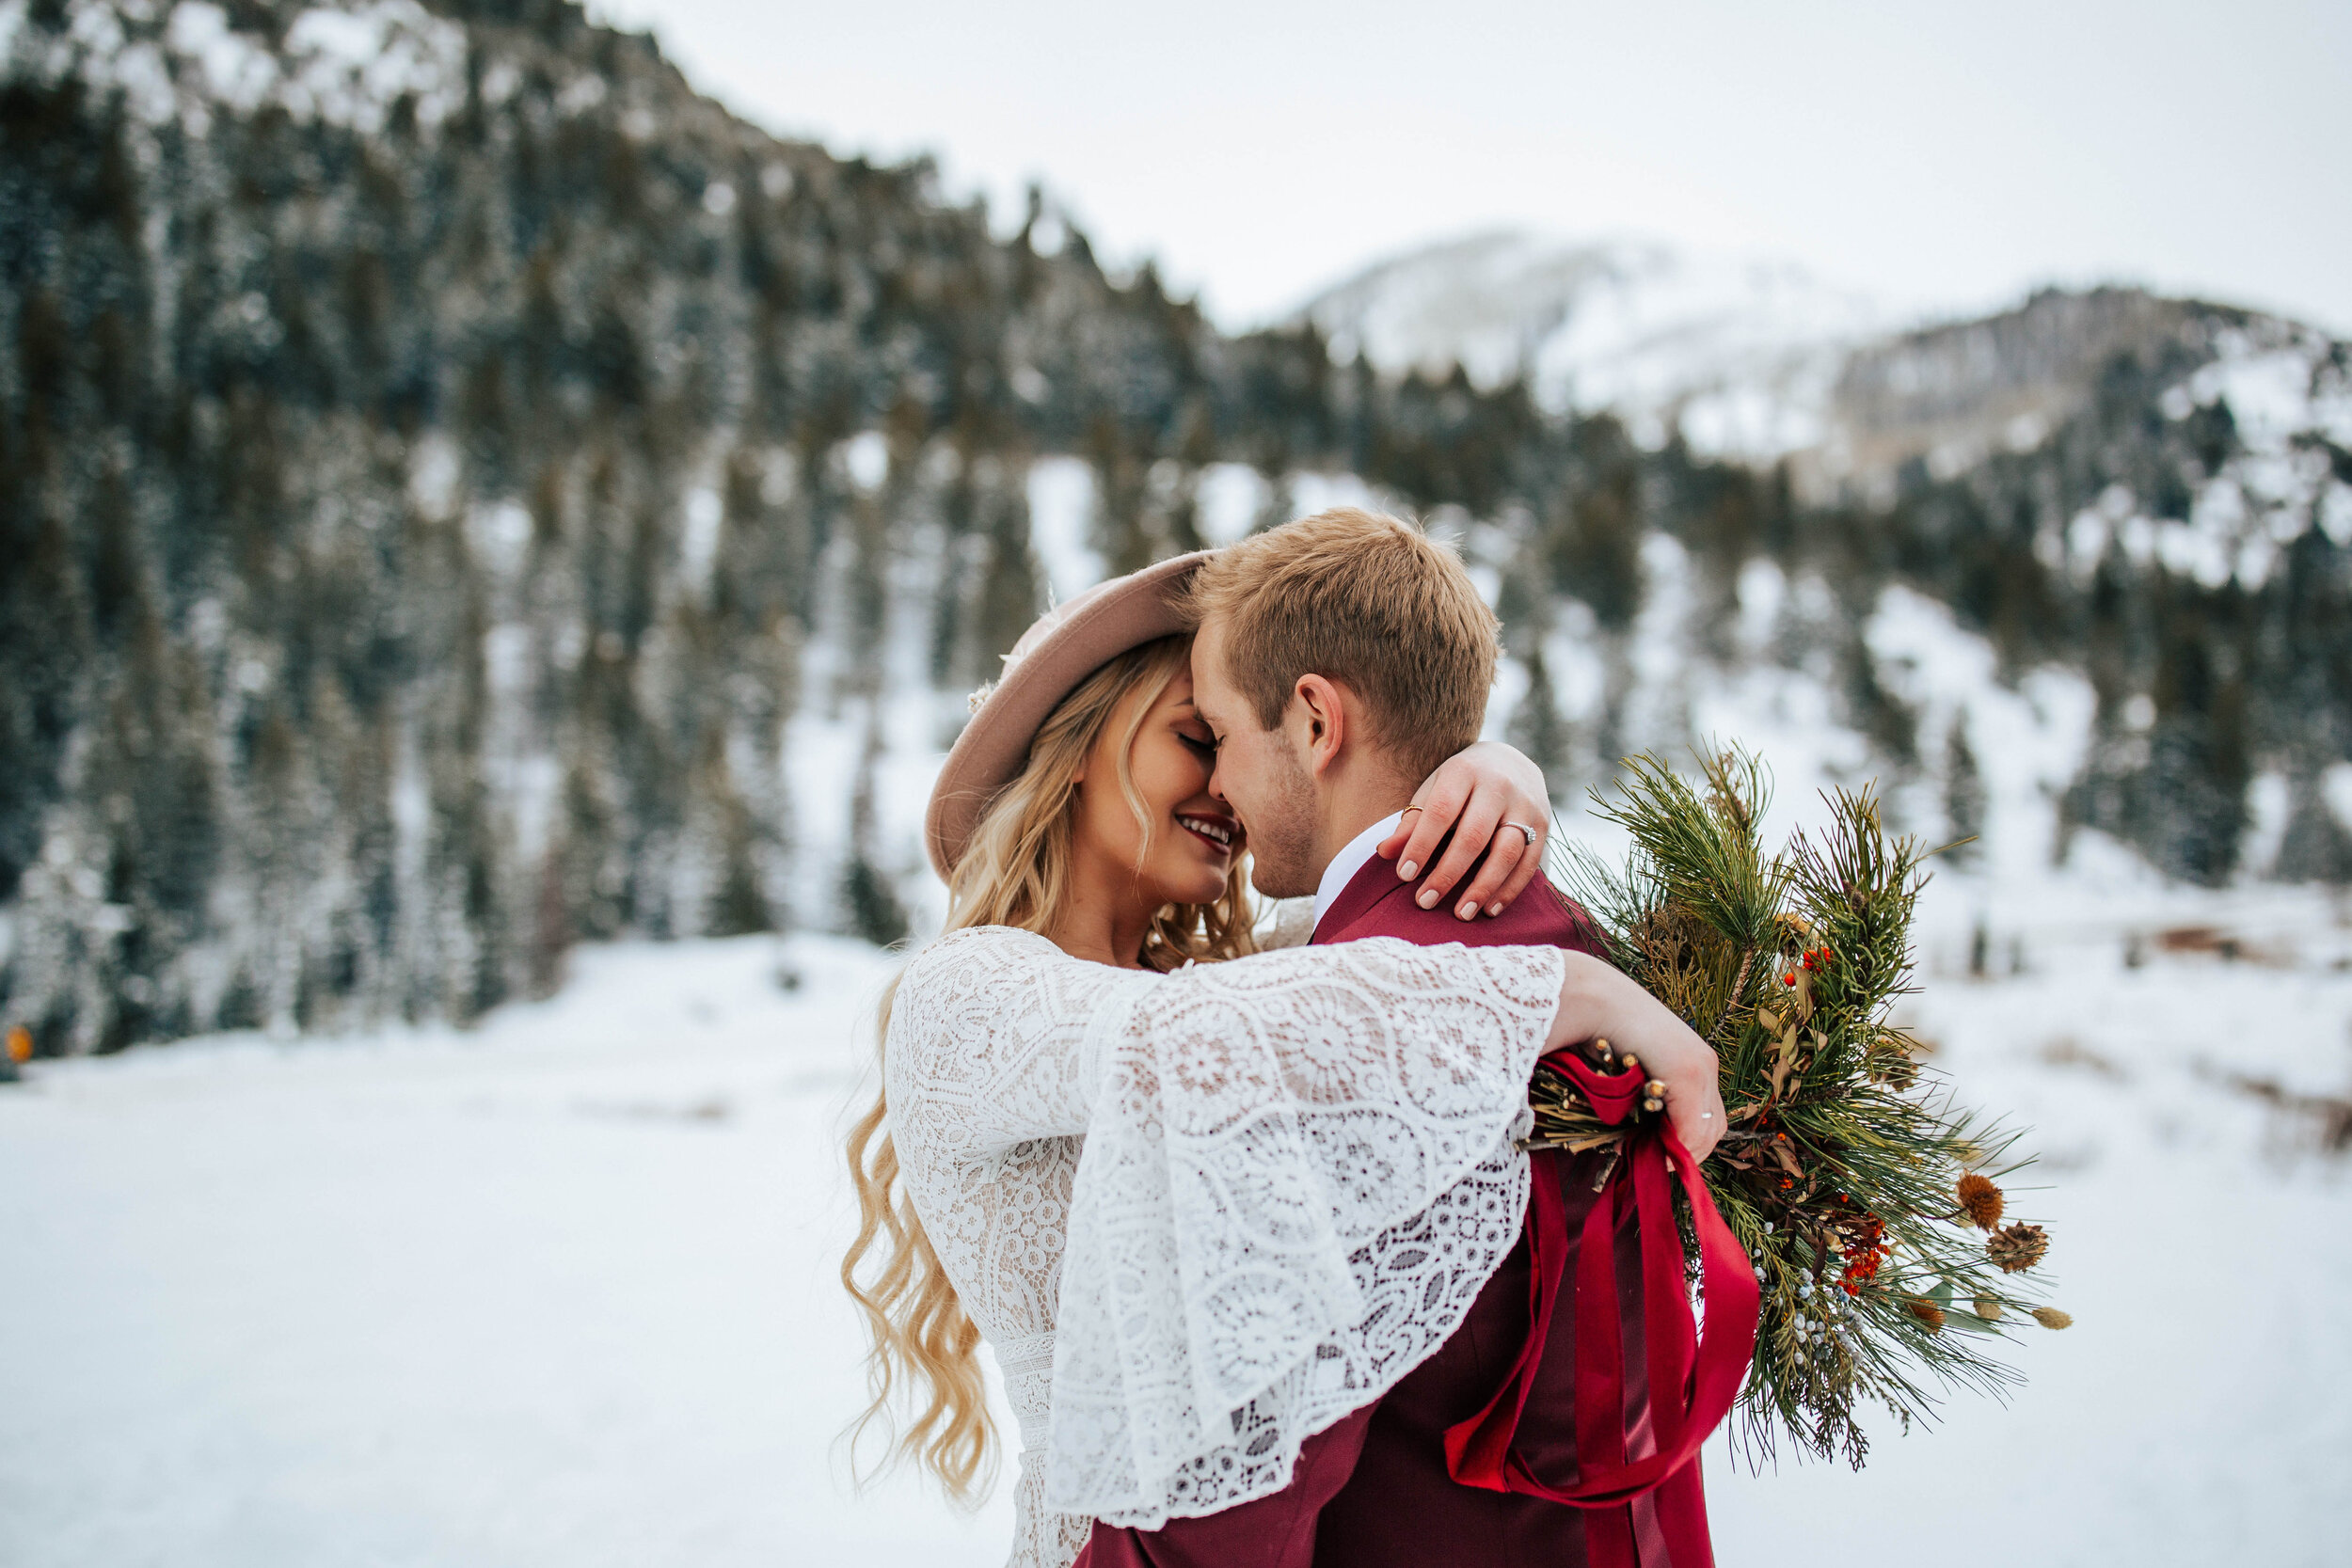 Snowy winter mountain bridal shoot bride and groom maroon suit bouquet pine trees Utah mountain wedding elopement photographer #utahphotographer #weddingphotographer #elopement #elopementphotographer